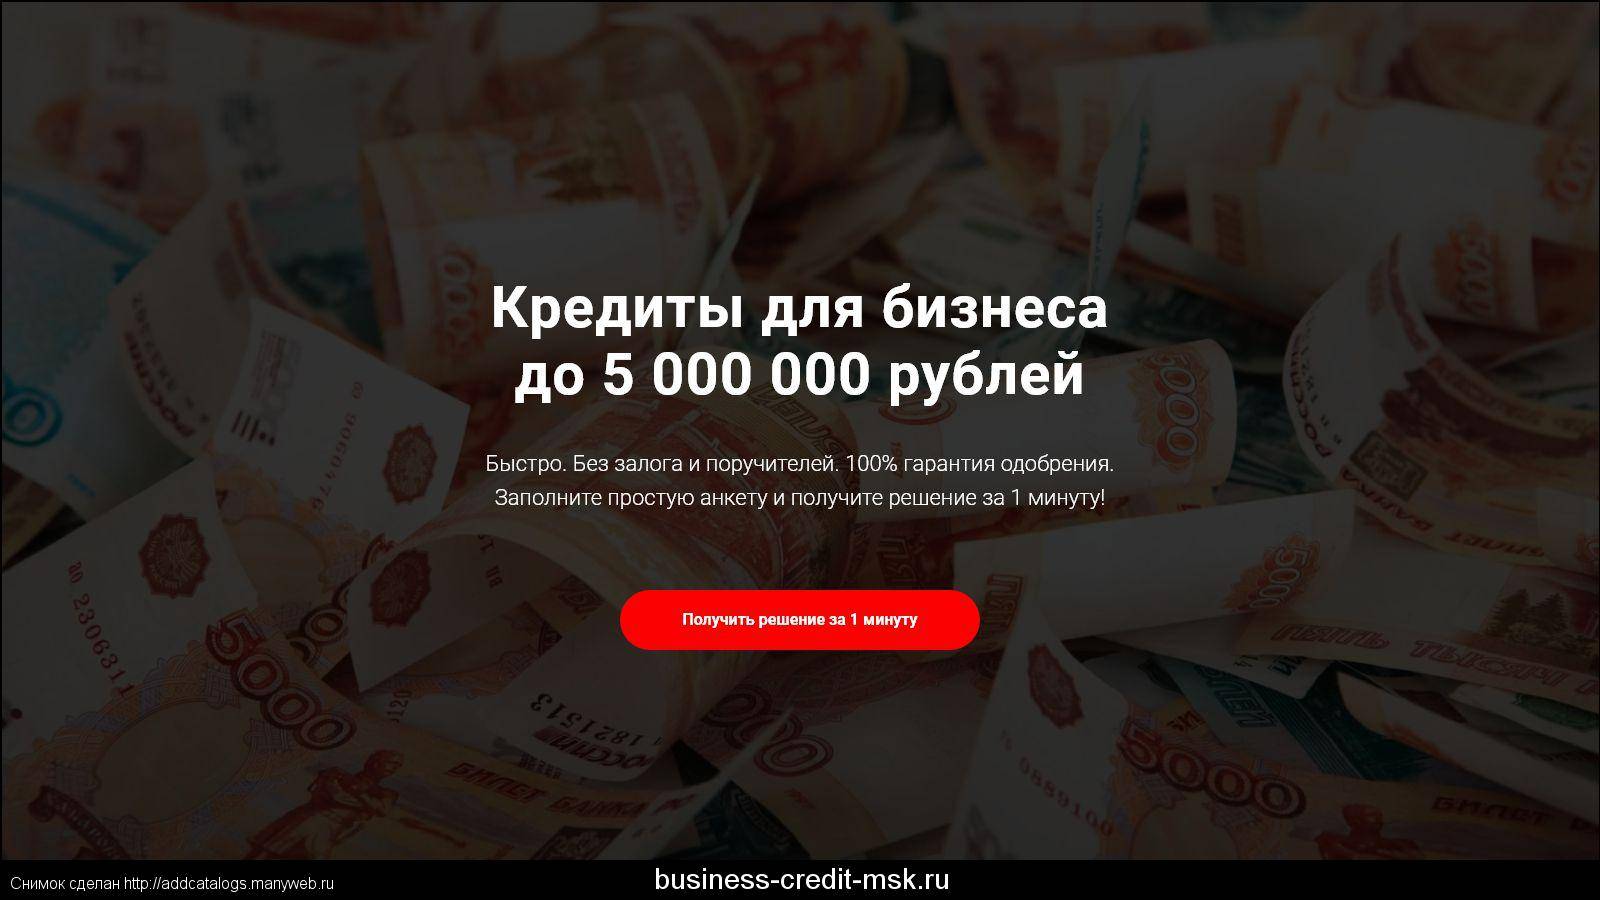 Займы без залога в Владивостоке срочно